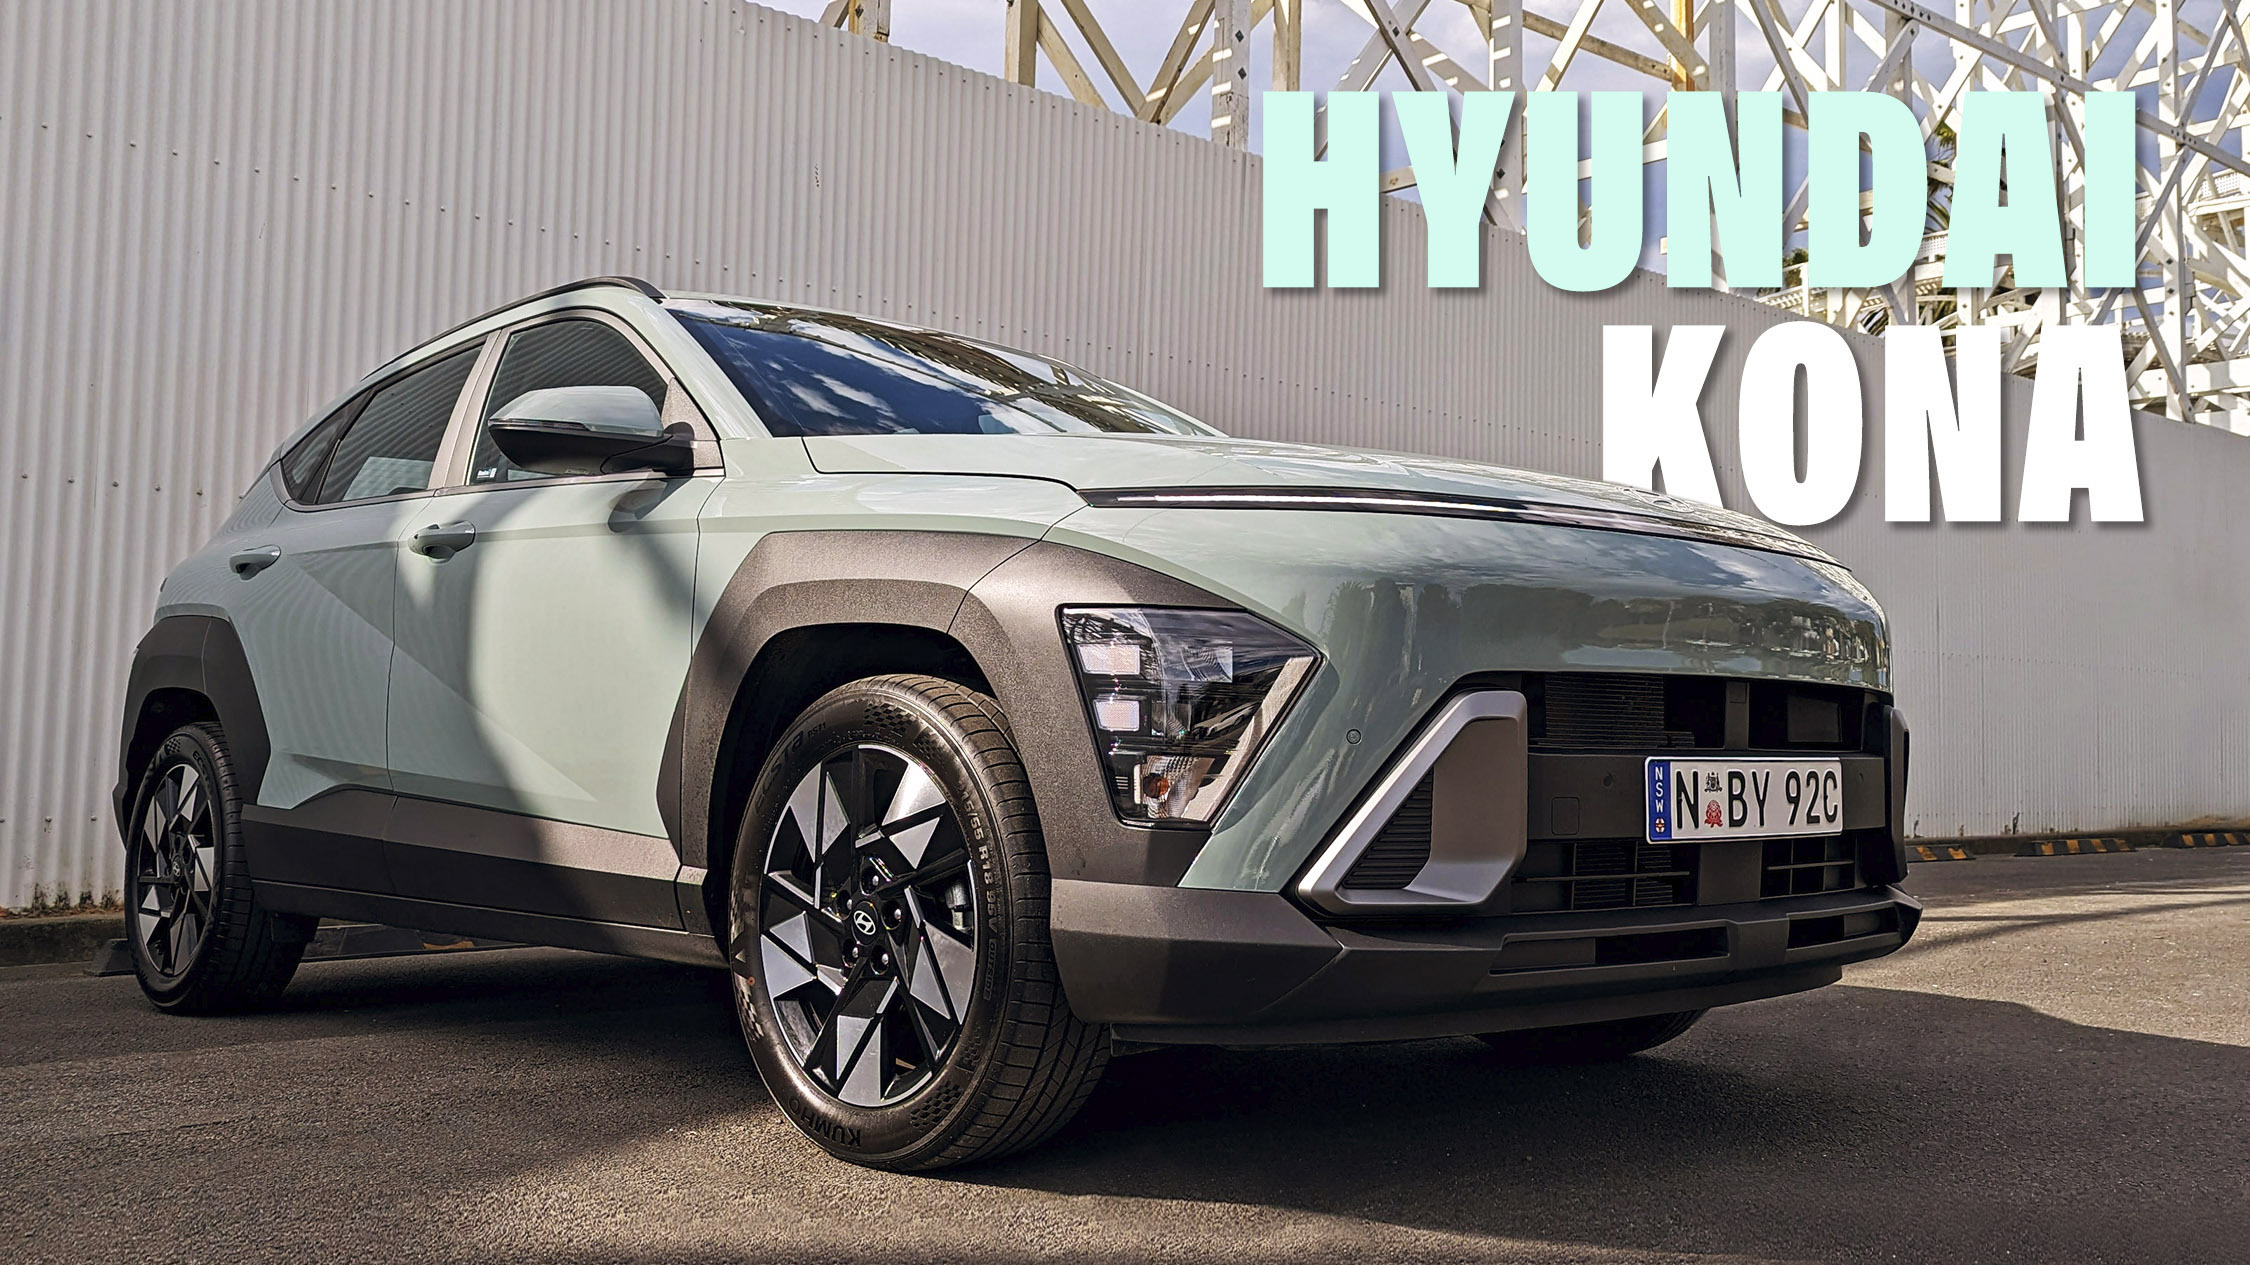 New Hyundai Kona Electric 2021 review